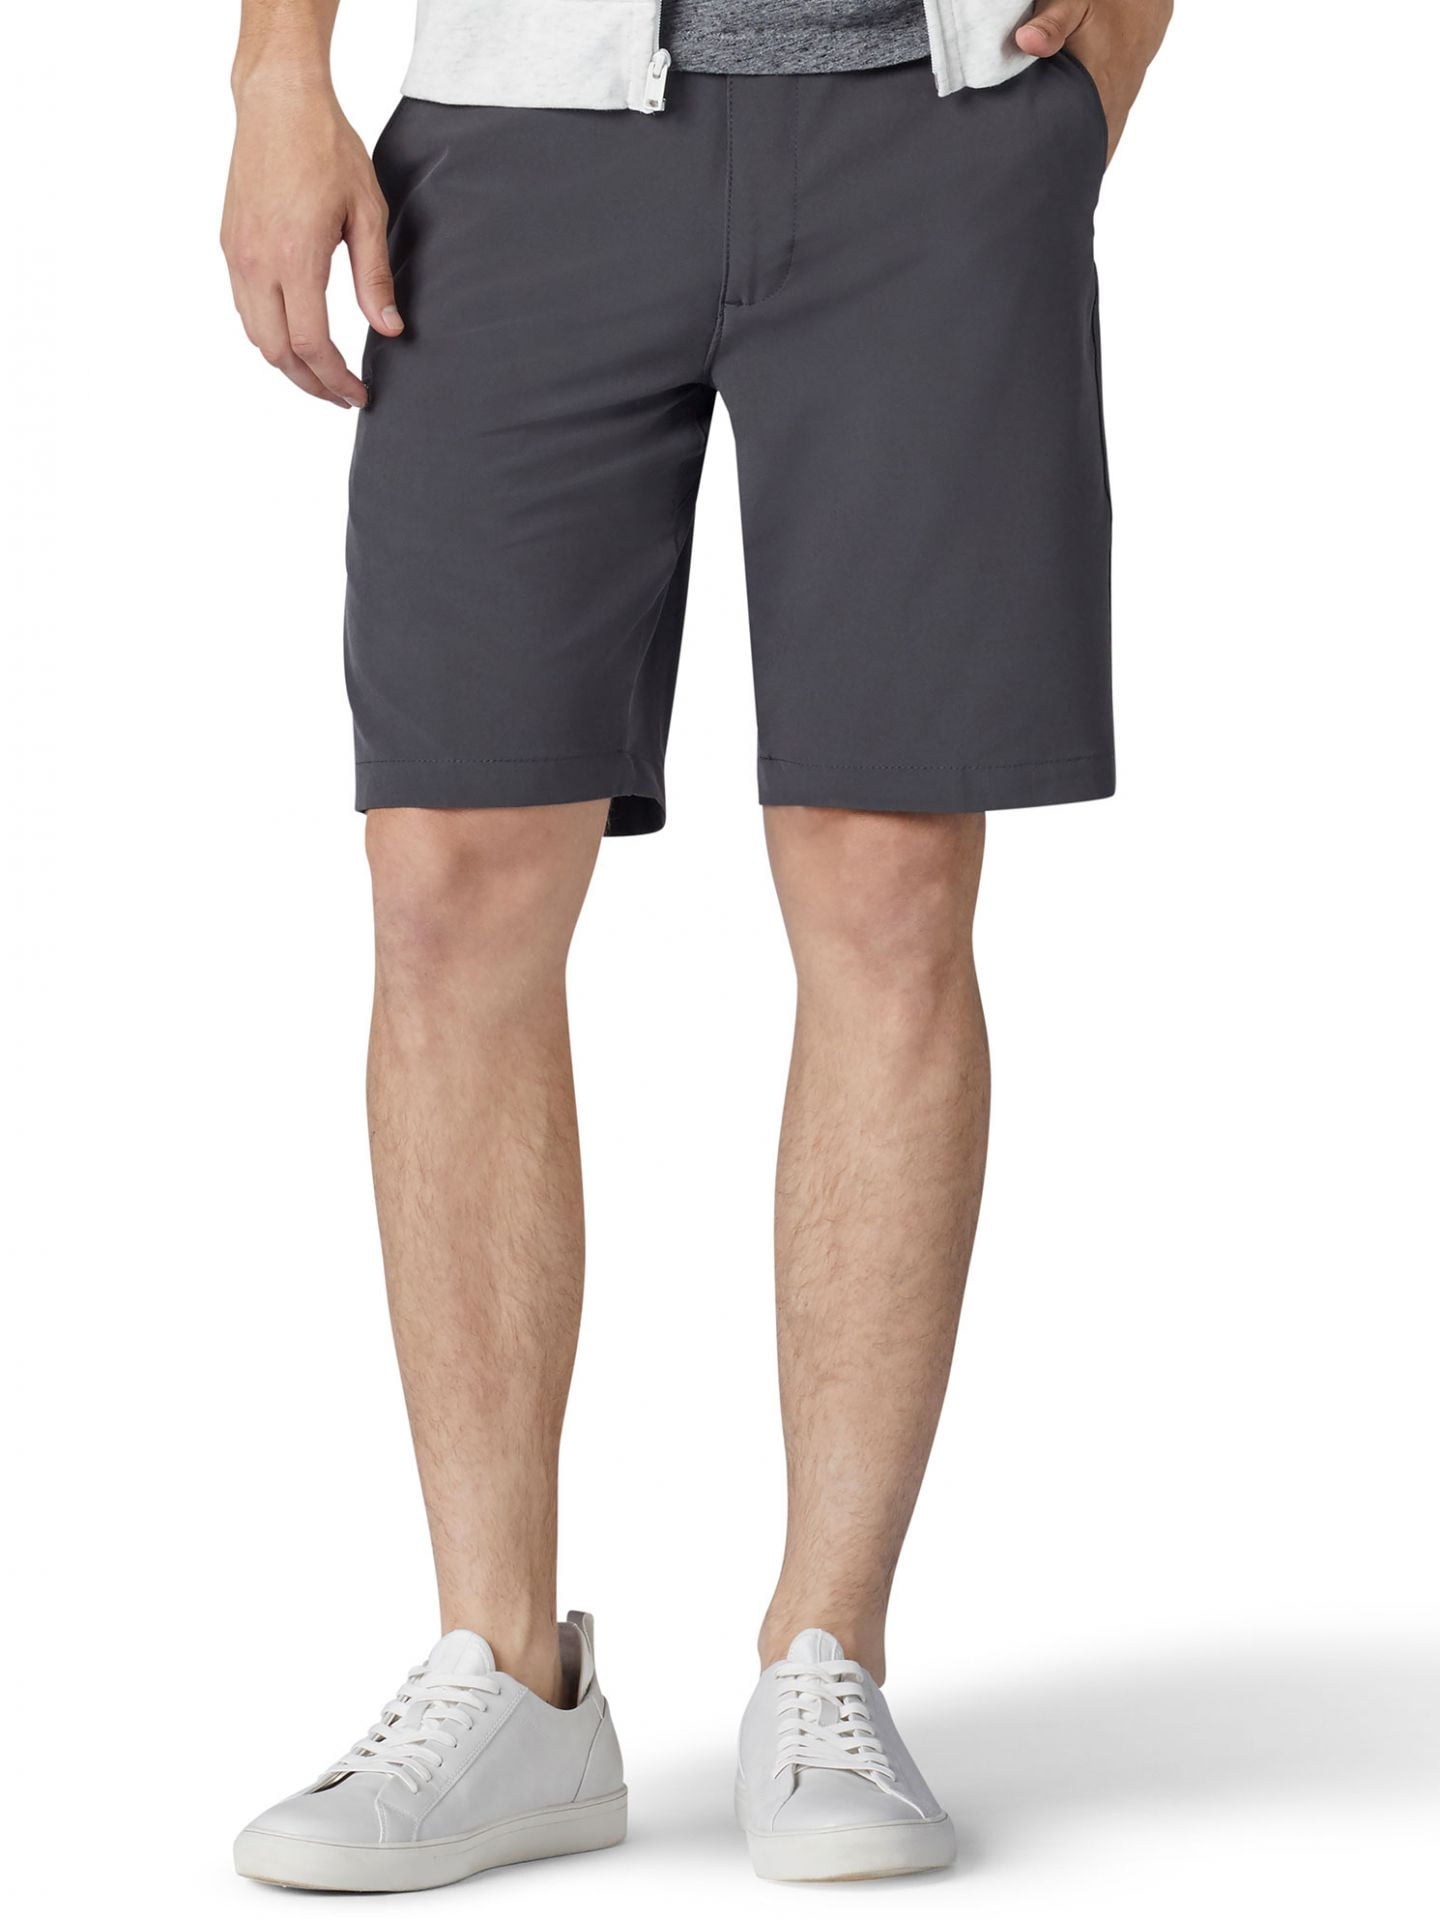 Lee Men's Tri-Flex Shorts - Dark Grey, Dark Grey, 33 - Walmart.com